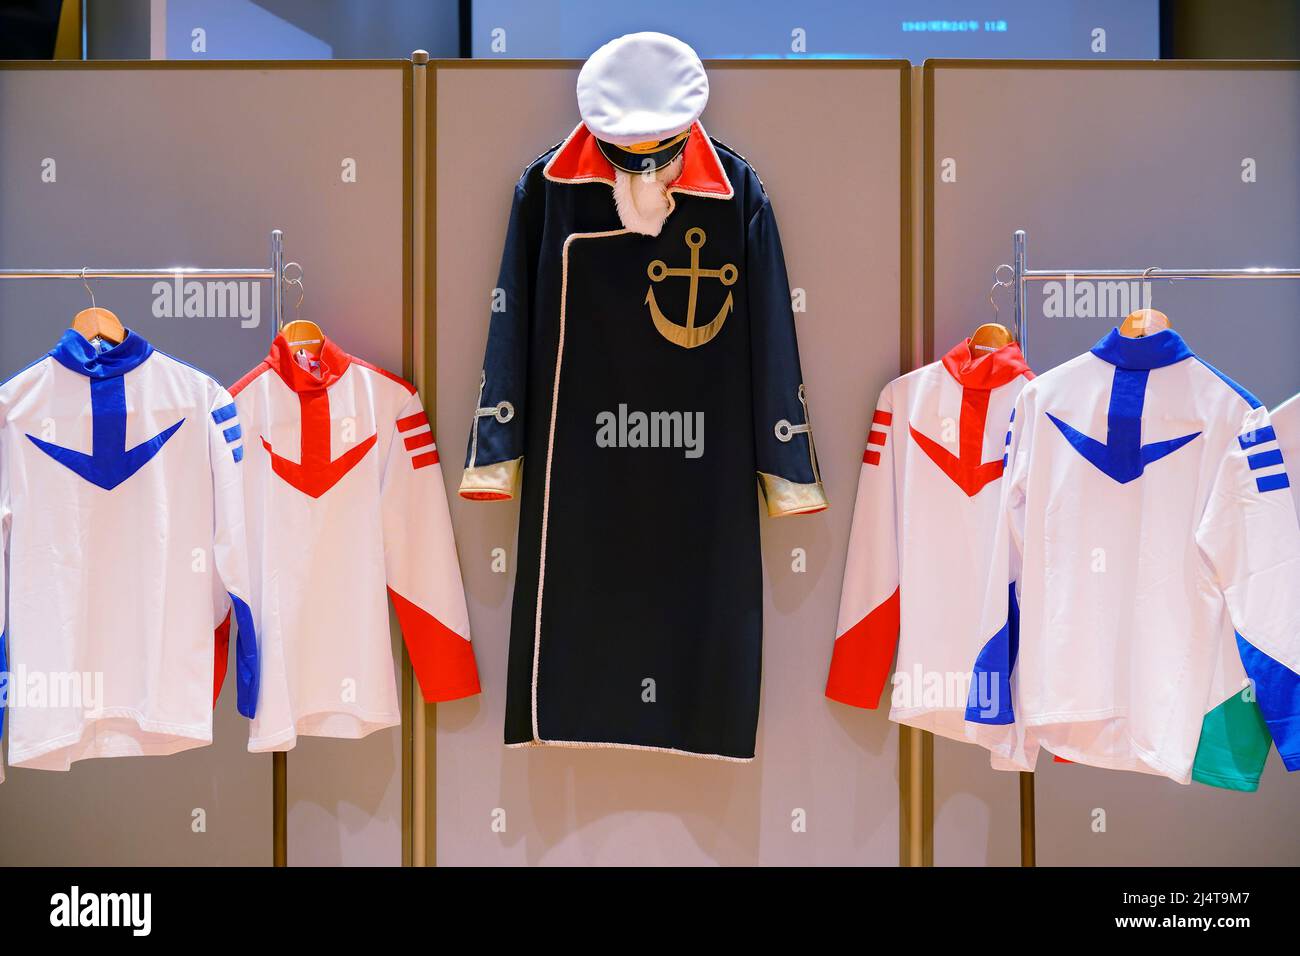 tokyo, japan - november 02 2019: Cosplay costume and jacket from the Japanese manga and anime series Space Battleship Yamato created by Leiji Matsumot Stock Photo